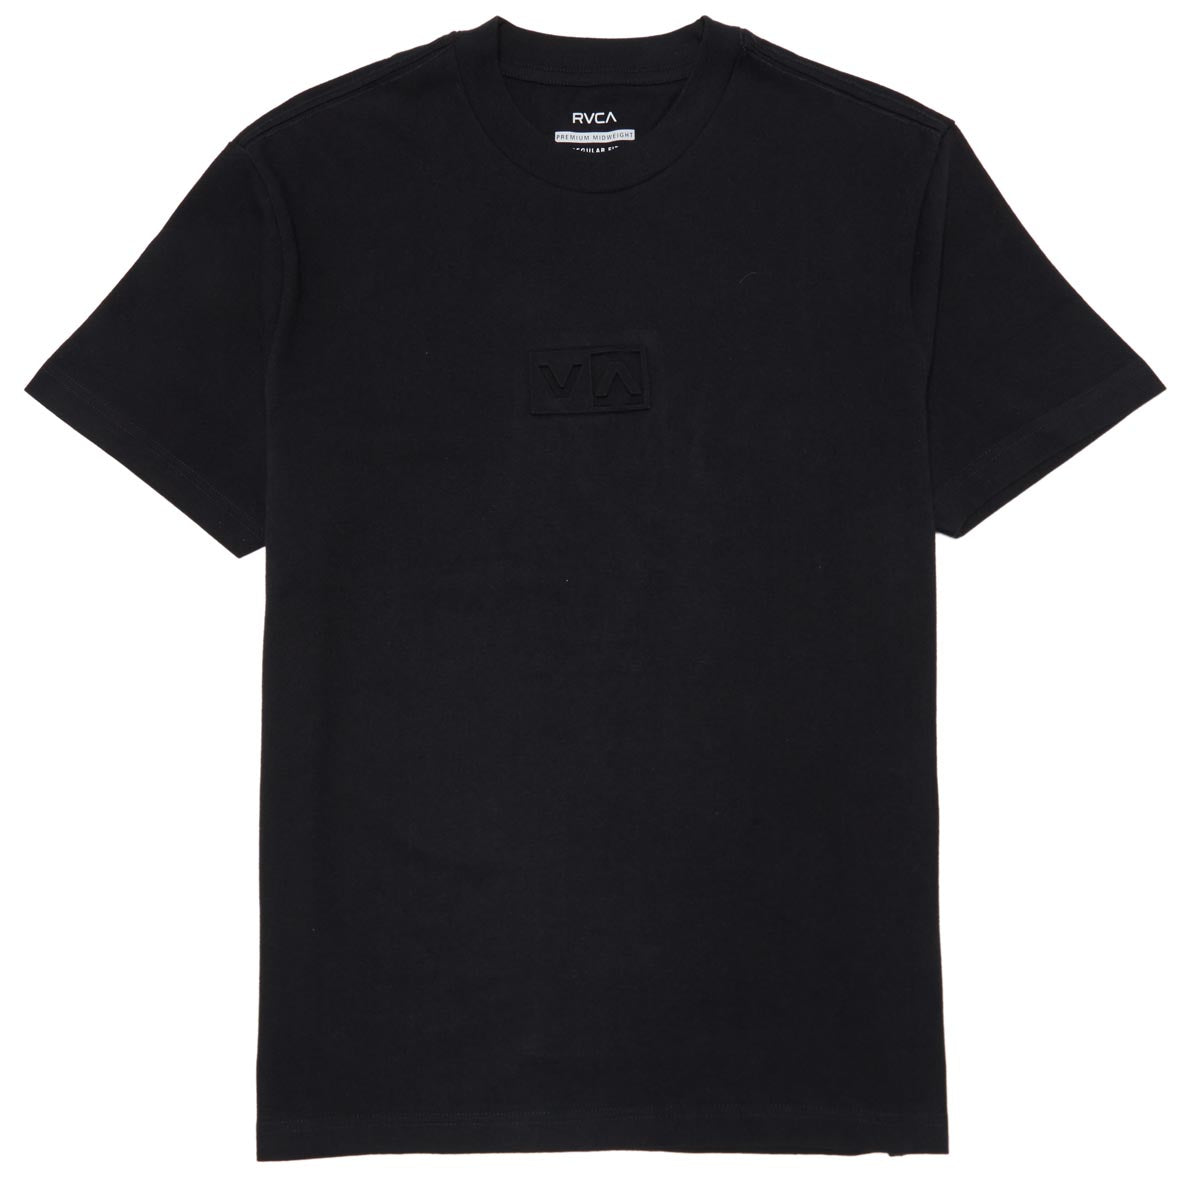 RVCA Lil Balance T-Shirt - Black image 1